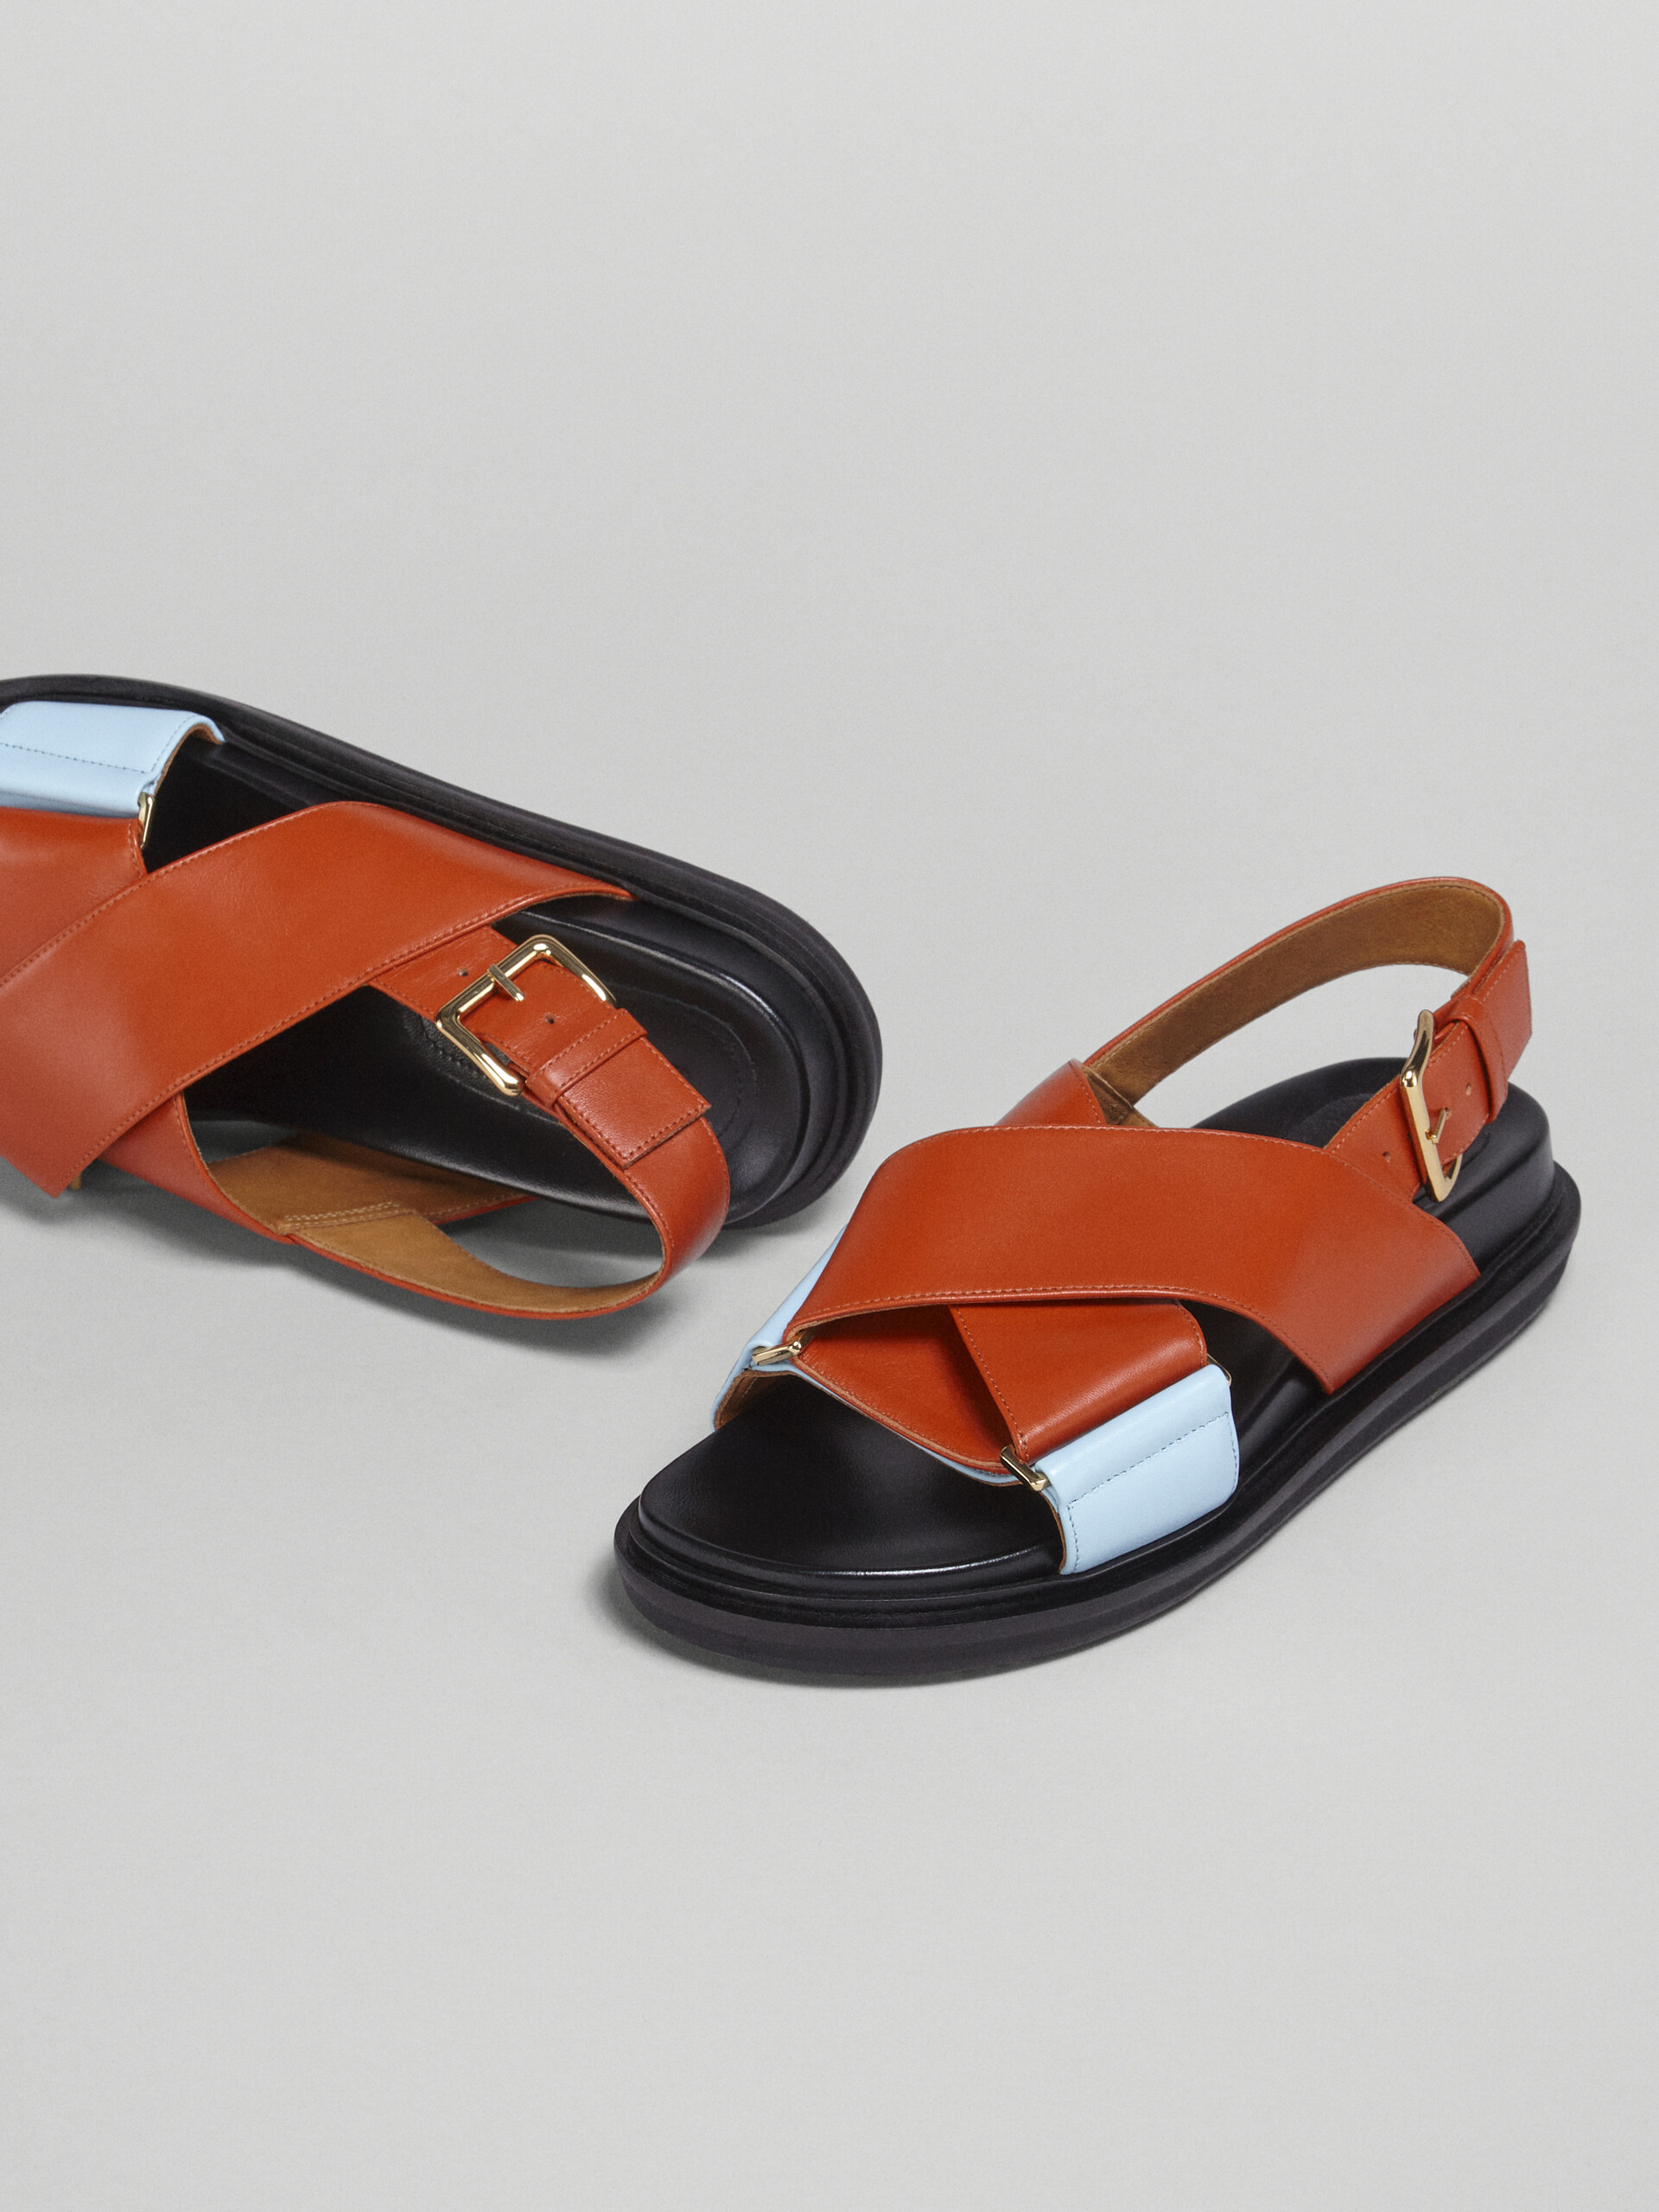 Sky blue and orange leather Fussbett - Sandals - Image 5